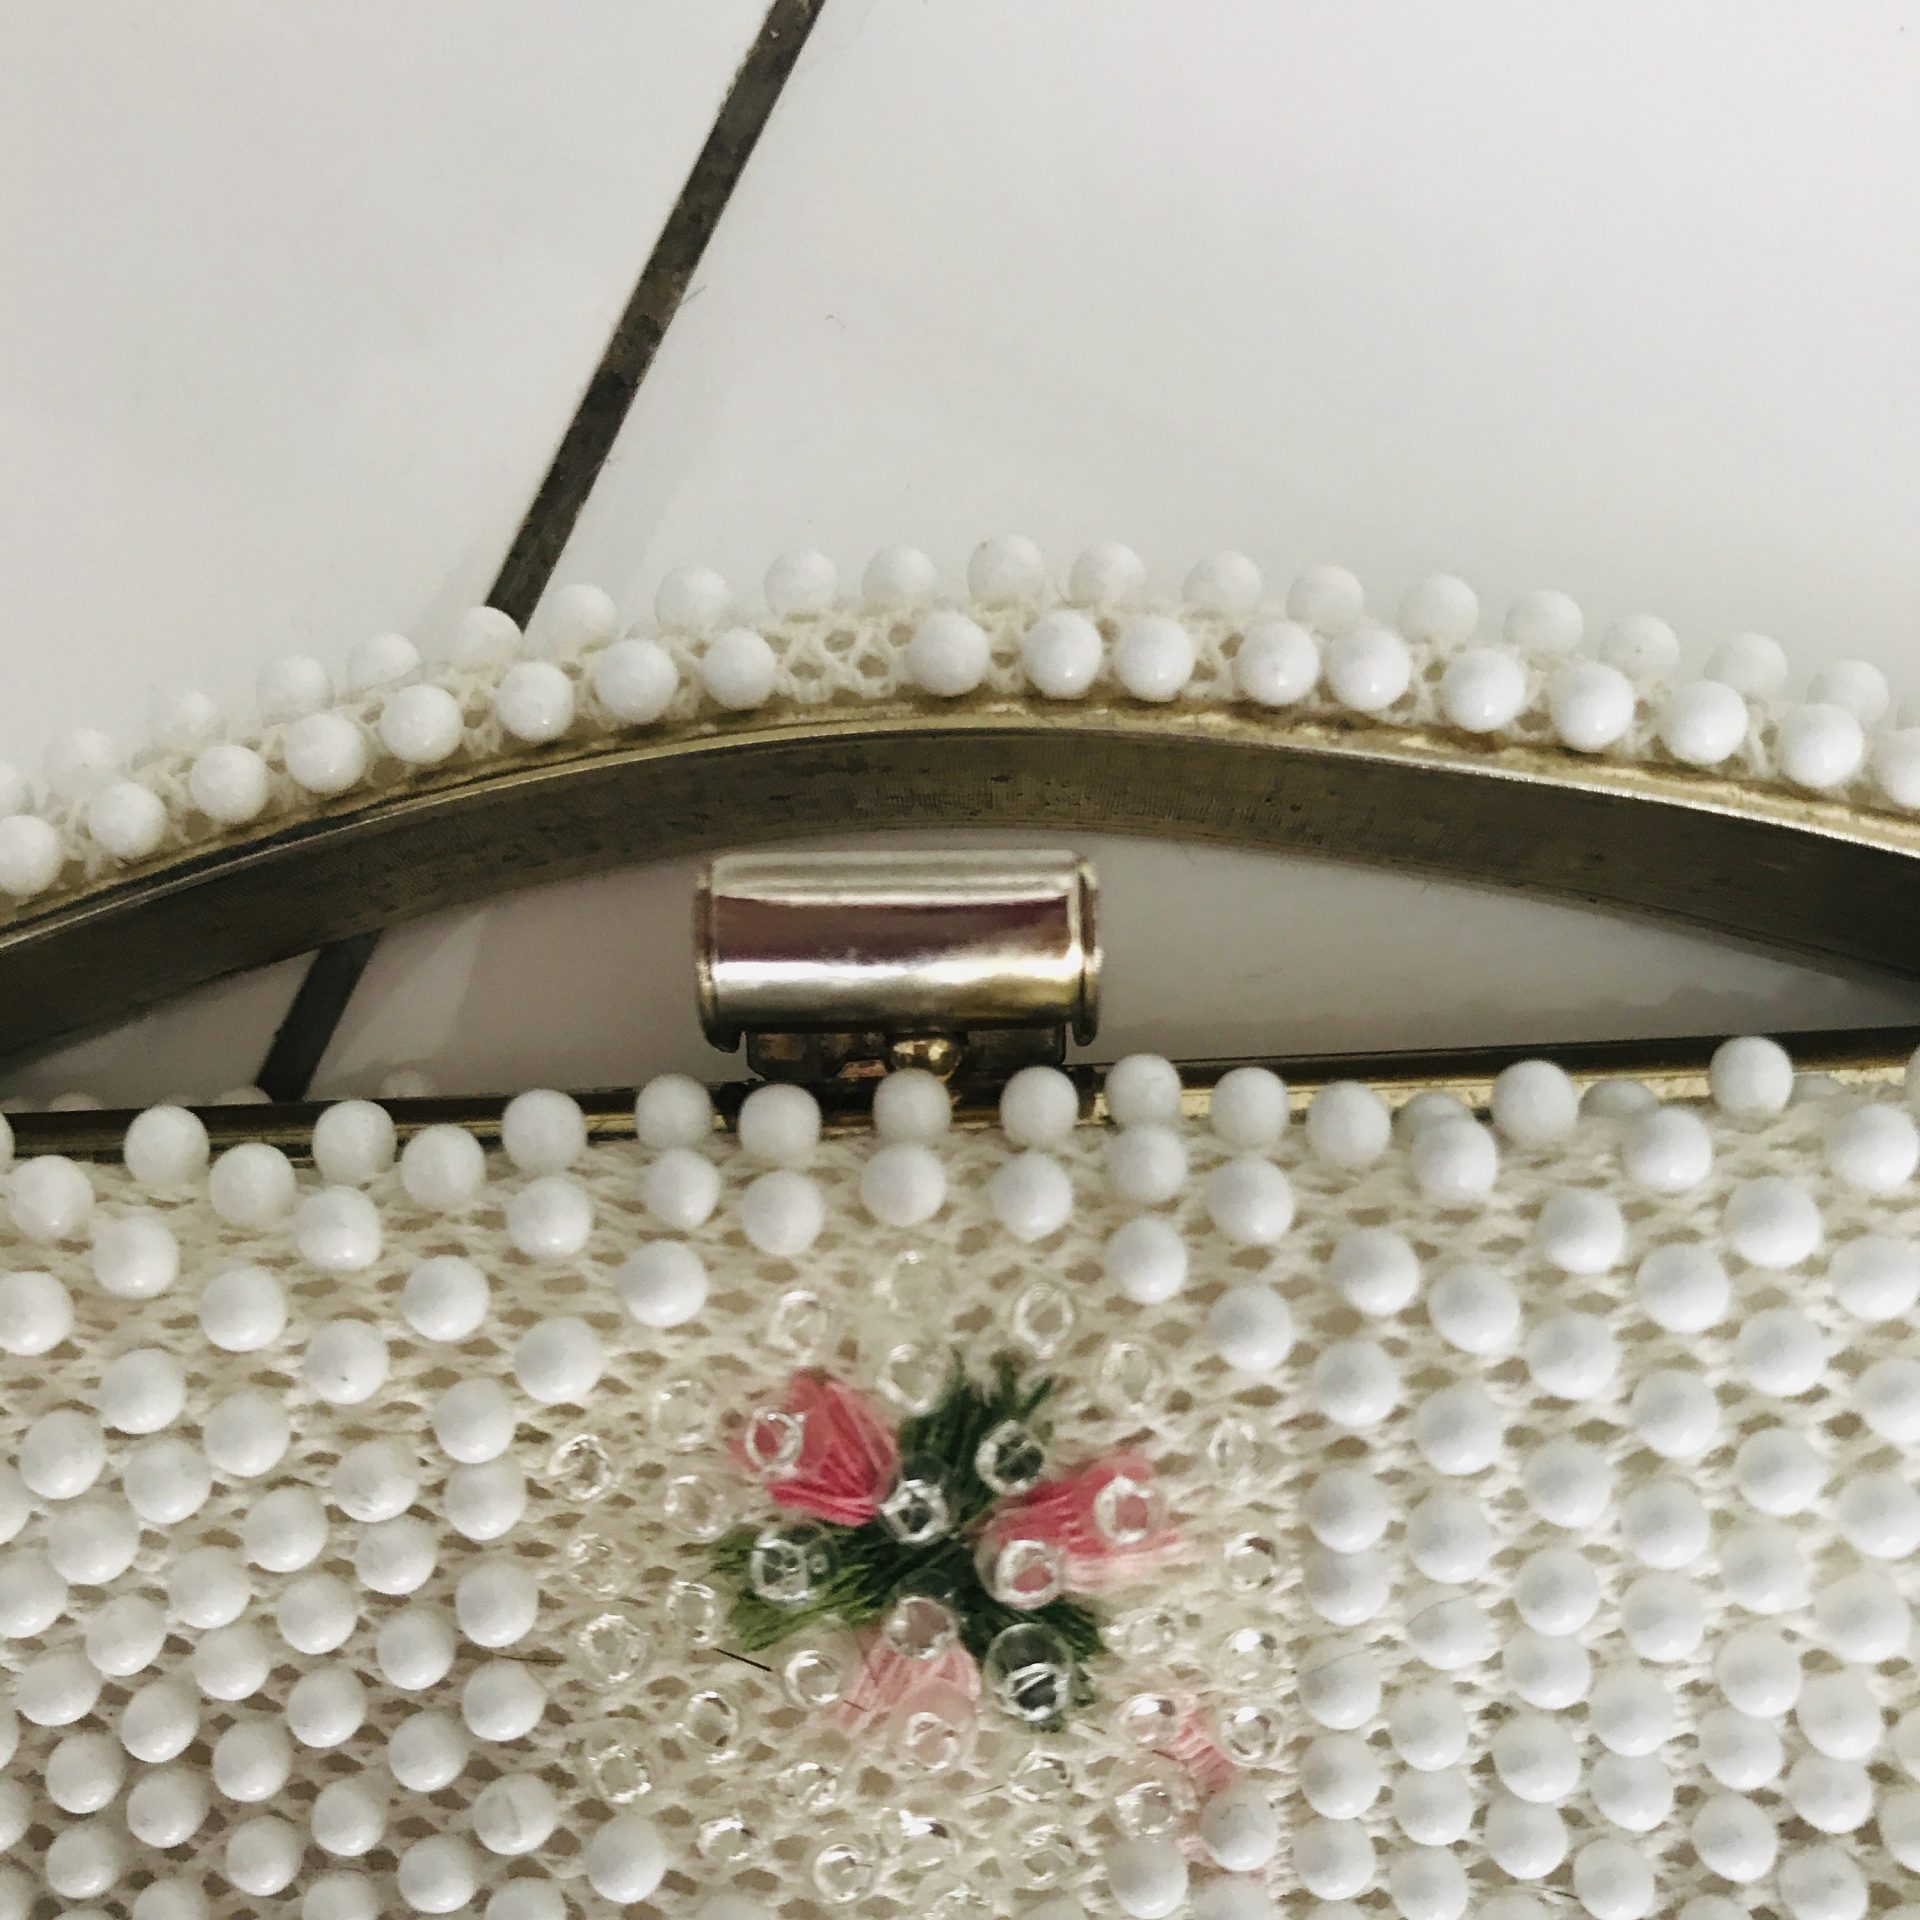 70011 B1 VHB Vintage 1950's Lumured Floral Pattern Beaded Handbag